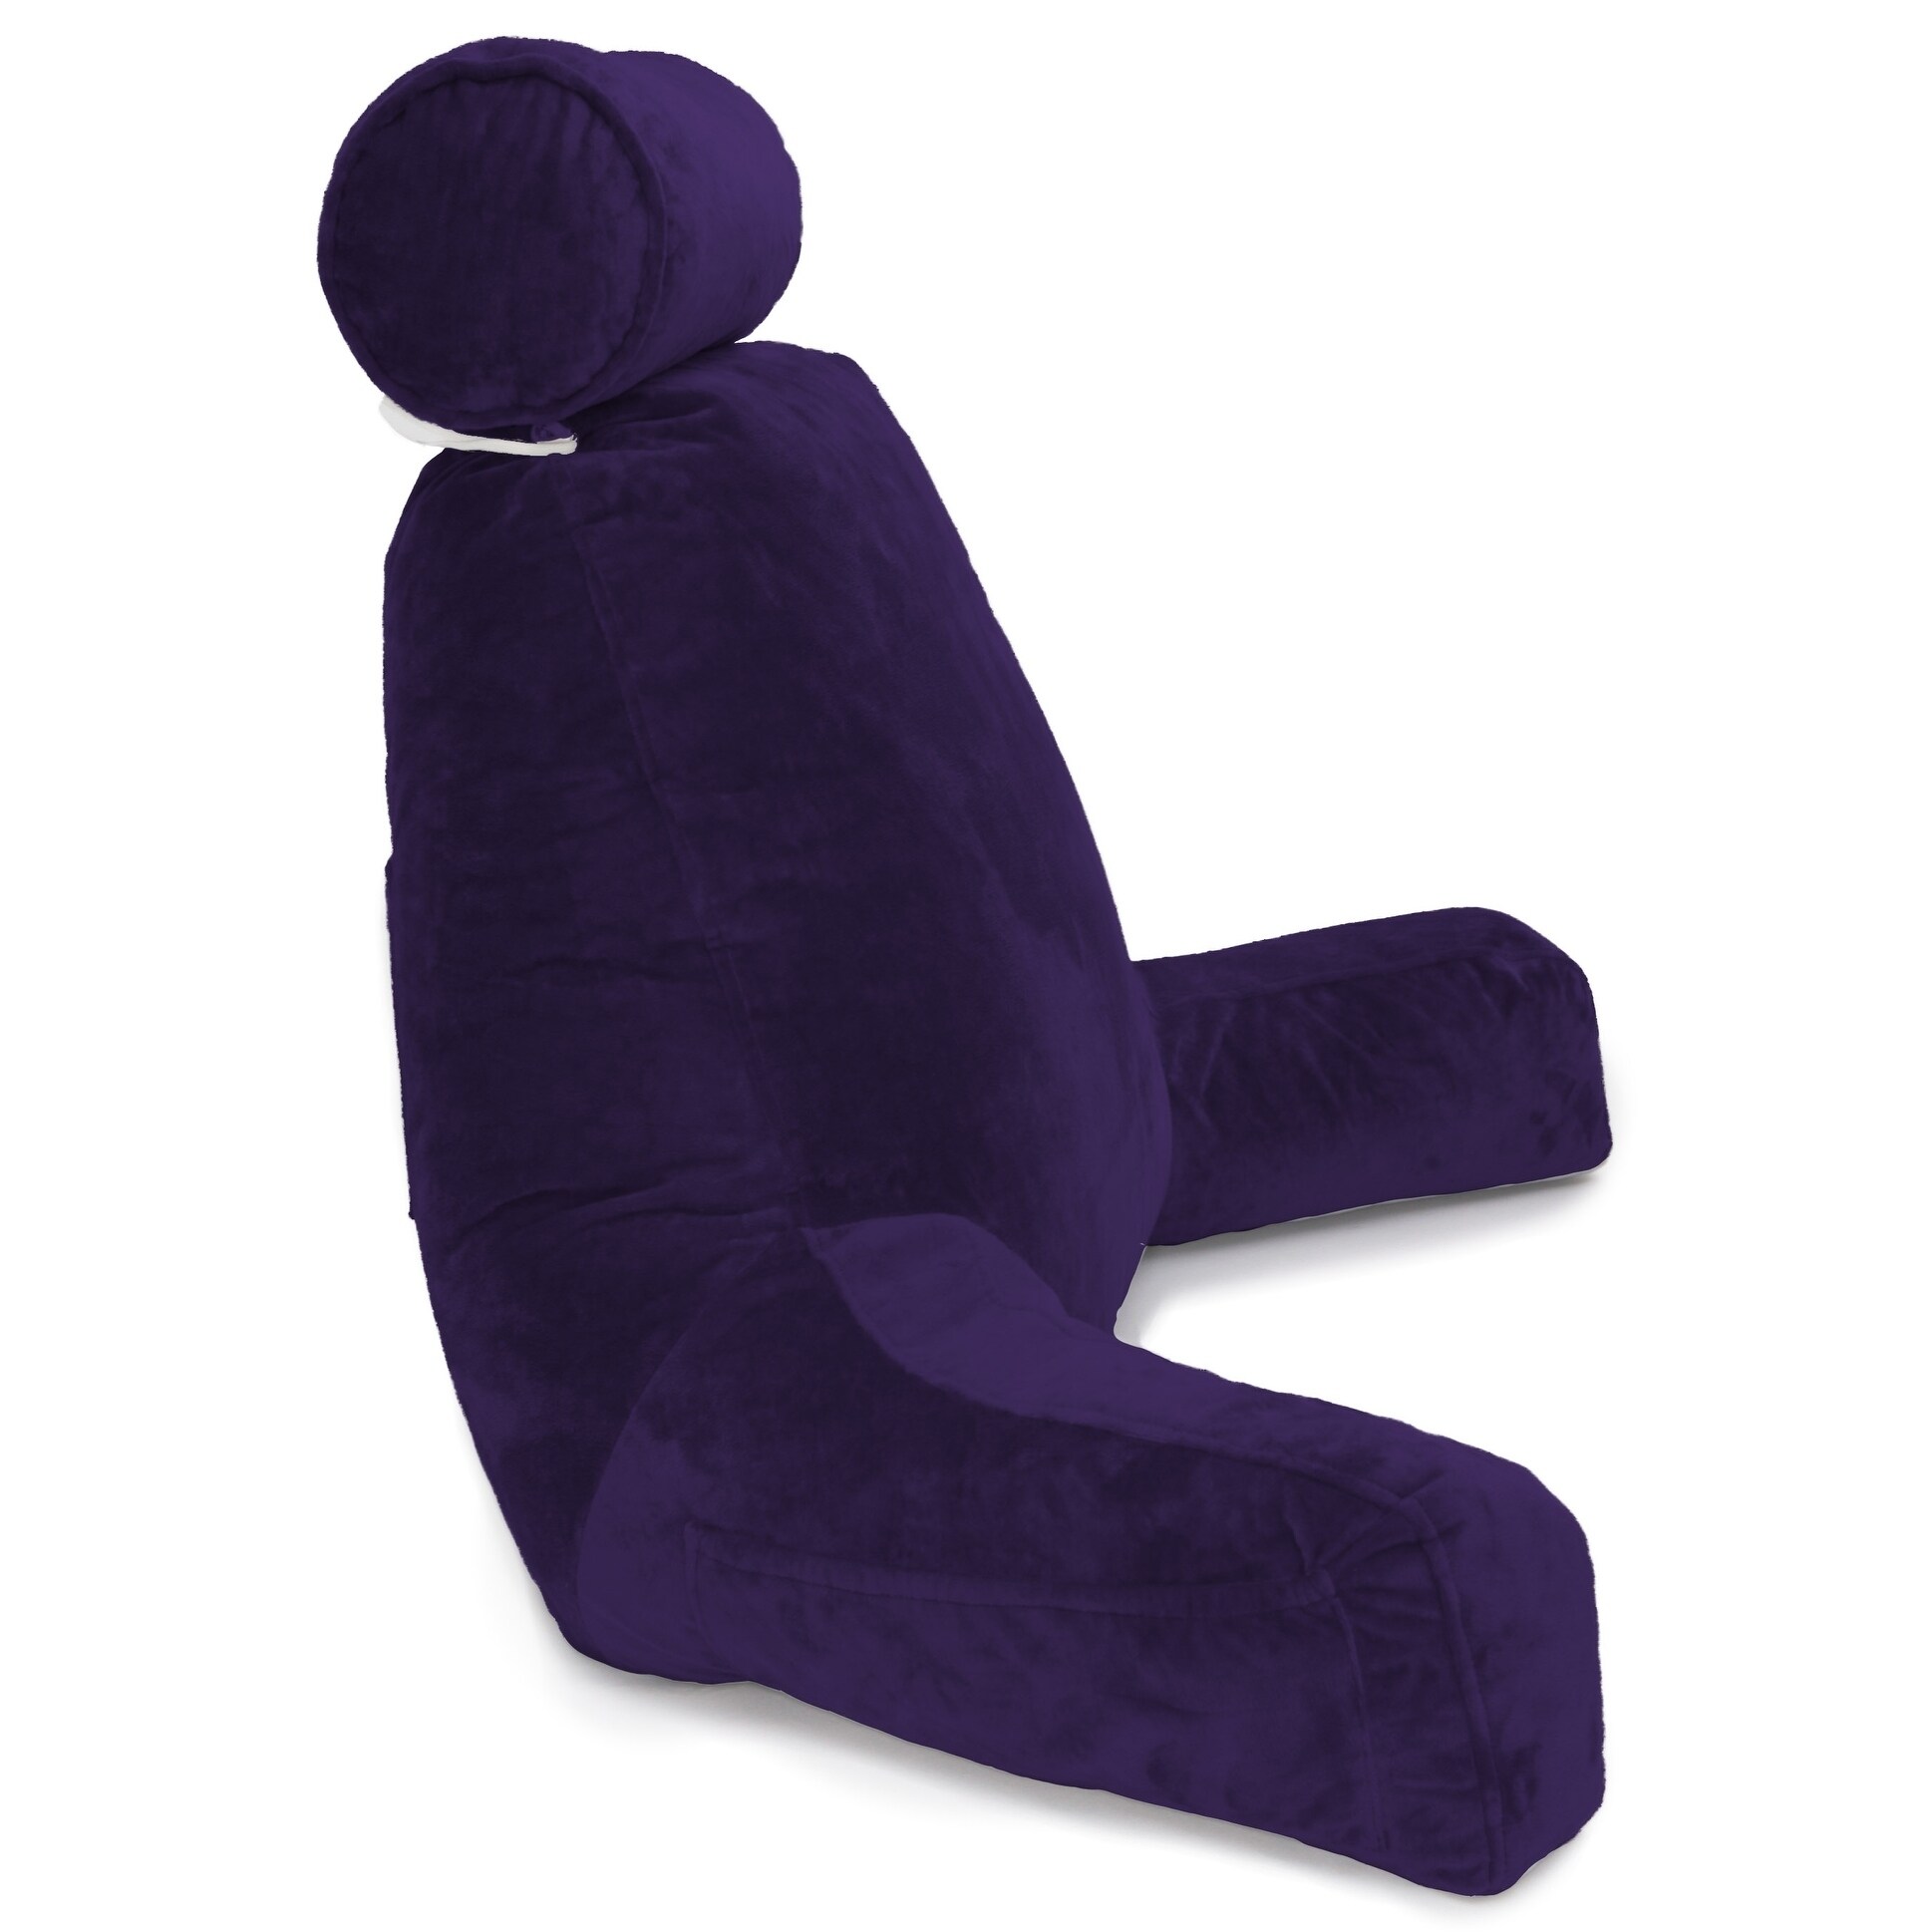 Husband Pillow Bedrest Reading & Support Bed Backrest w/Arms Purple -  Shredded Foam Reading Pillow - Bed Rest Pillow - Bed Bath & Beyond -  18181613